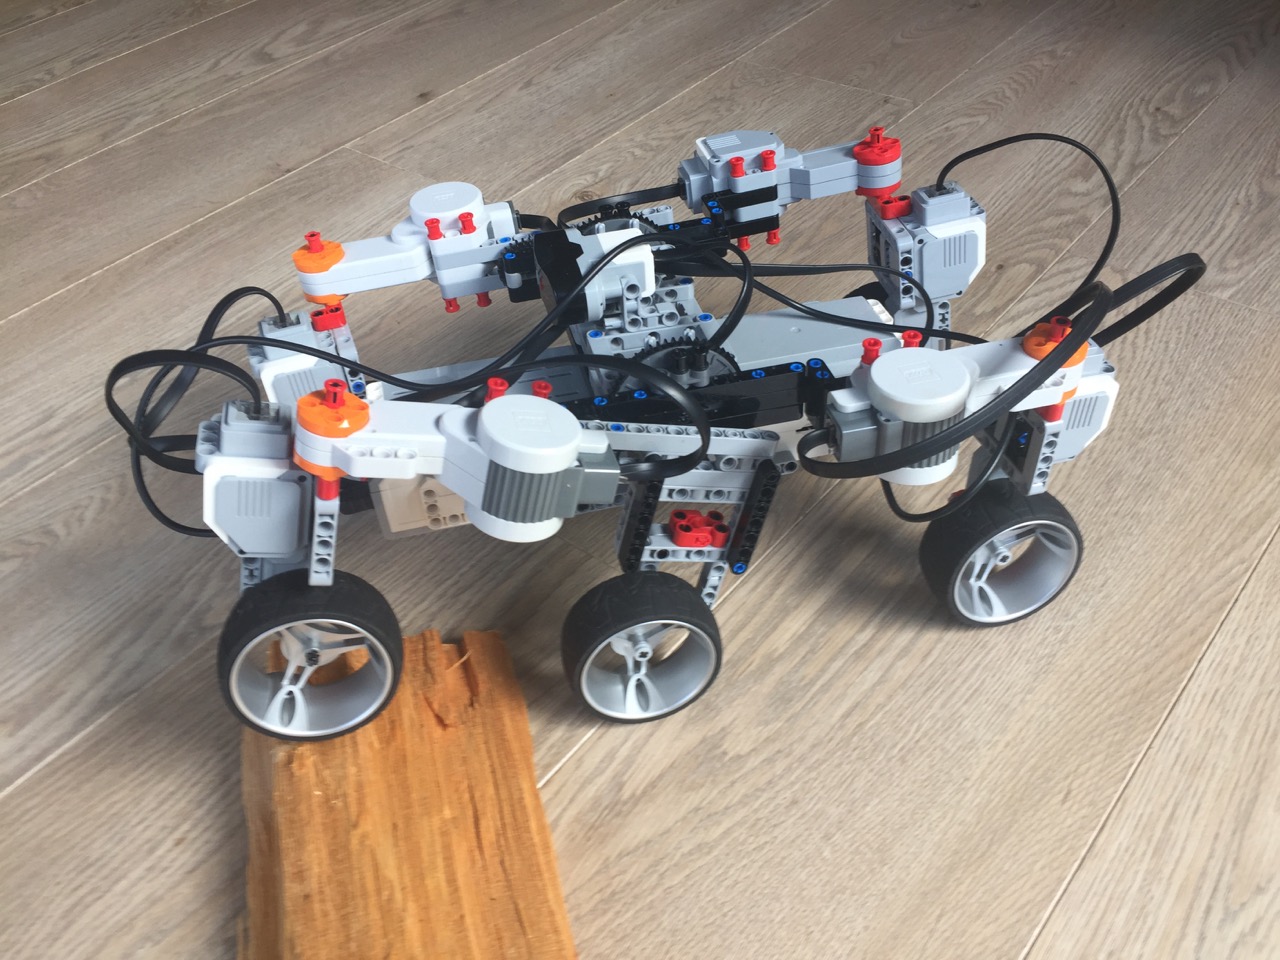 Simple Mindstorms Rover - Christoph Bartneck, Ph.D.